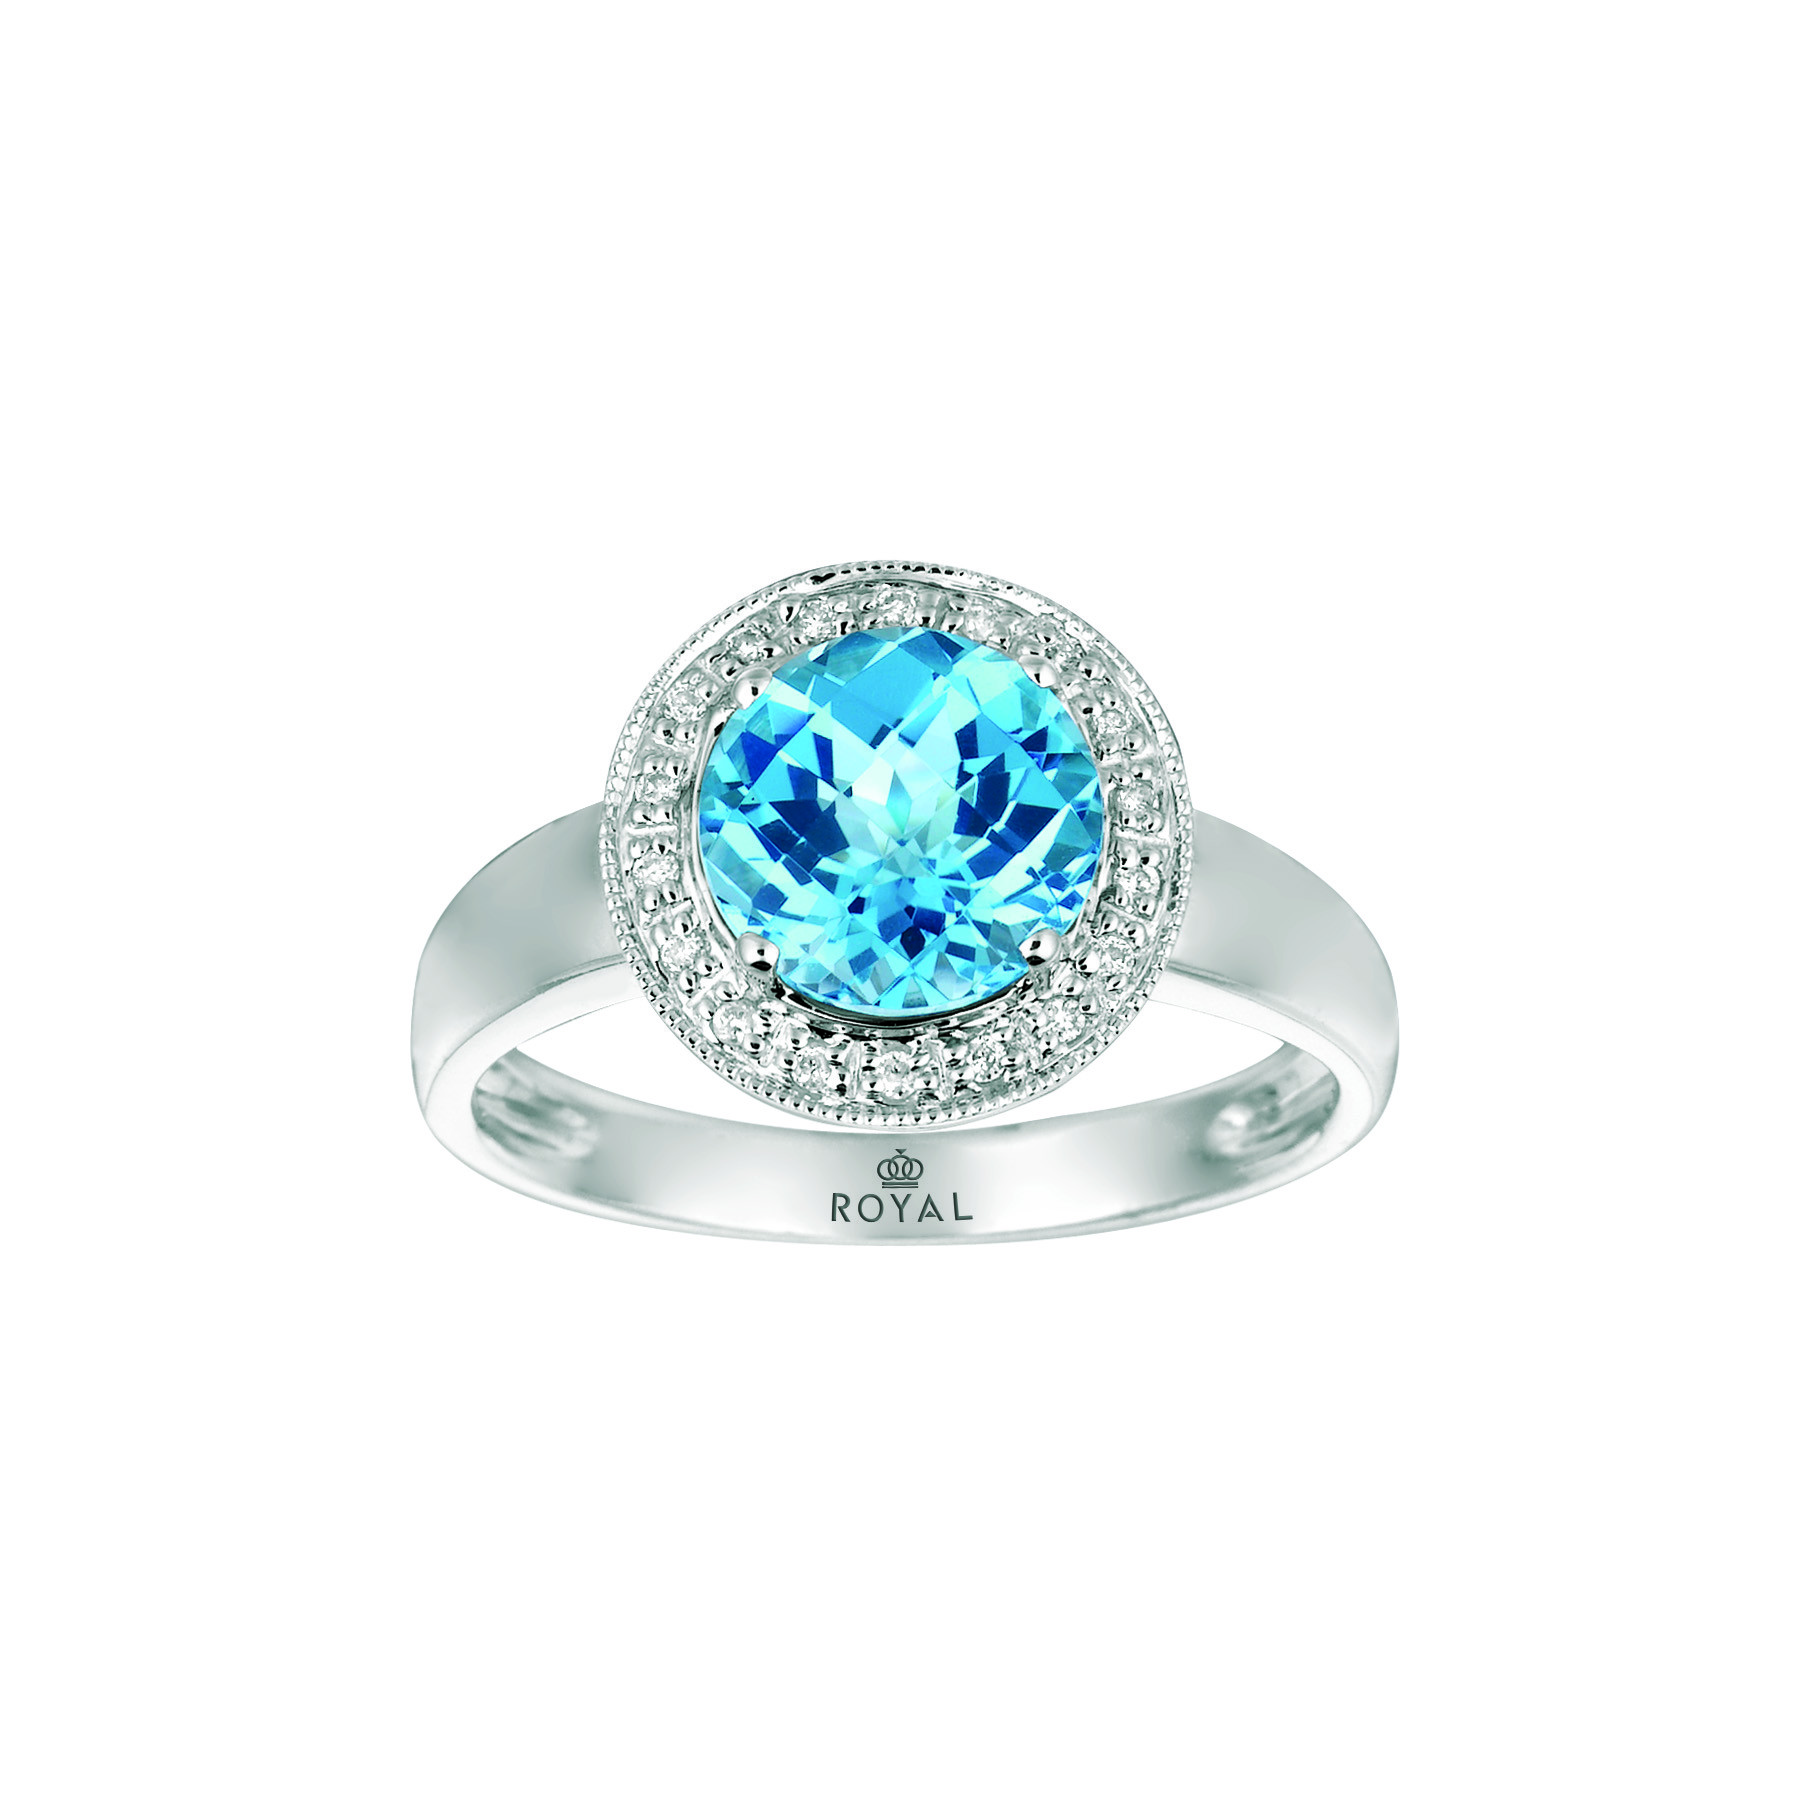 DIAMOND & BLUE TOPAZ RING